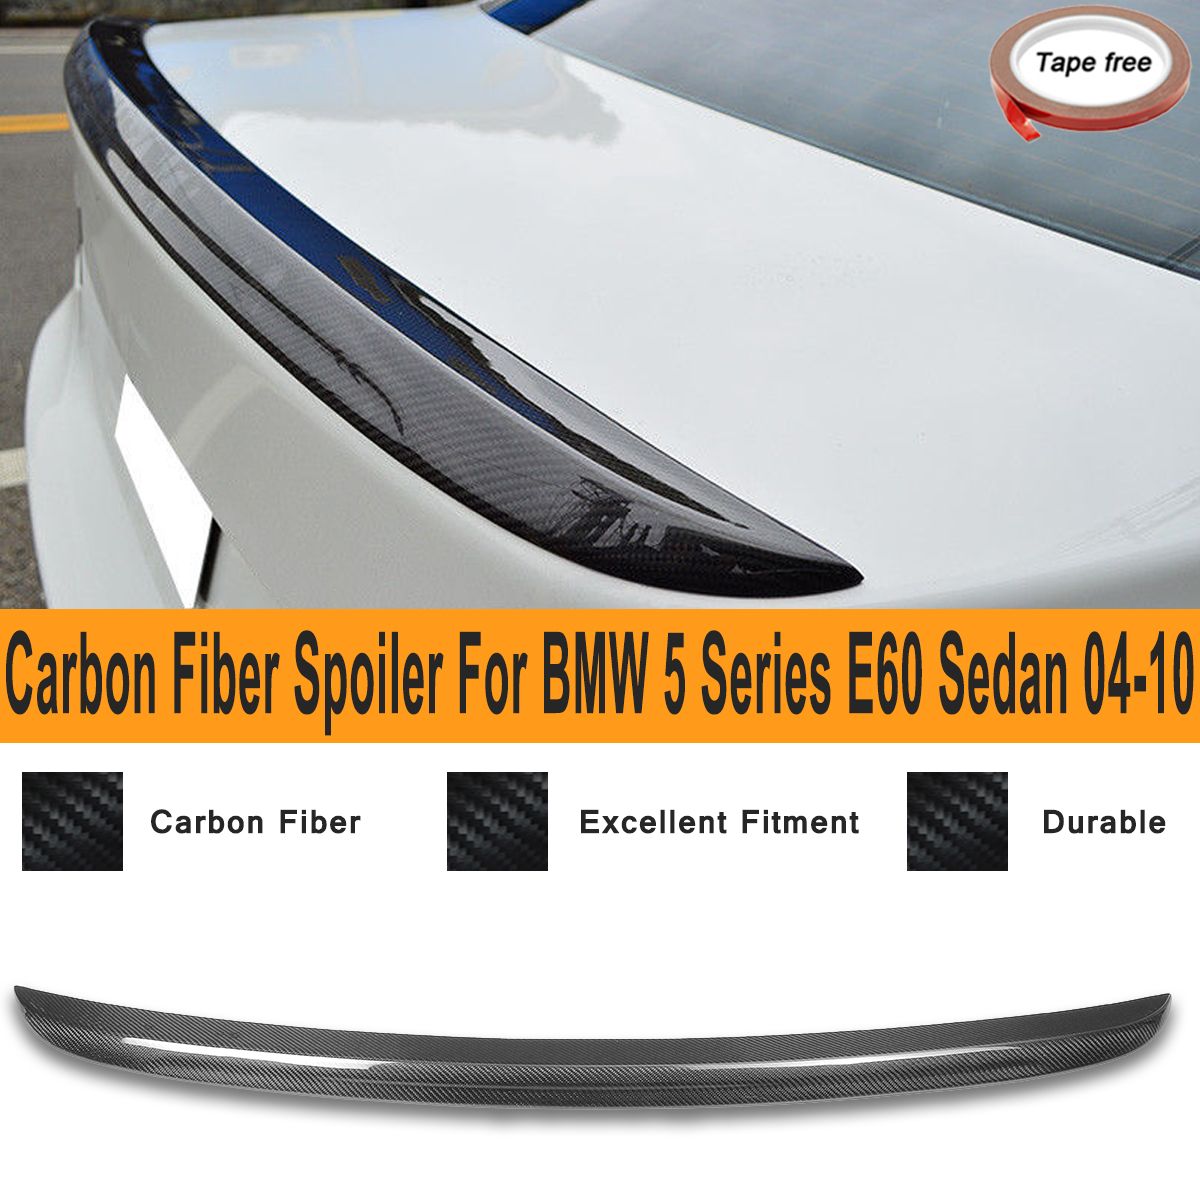 Carbon-Fiber-M5-Style-Car-Rear-Trunk-Spoiler-Wing-For-BMW-E60-528i-535i-550i-04-10-1573812